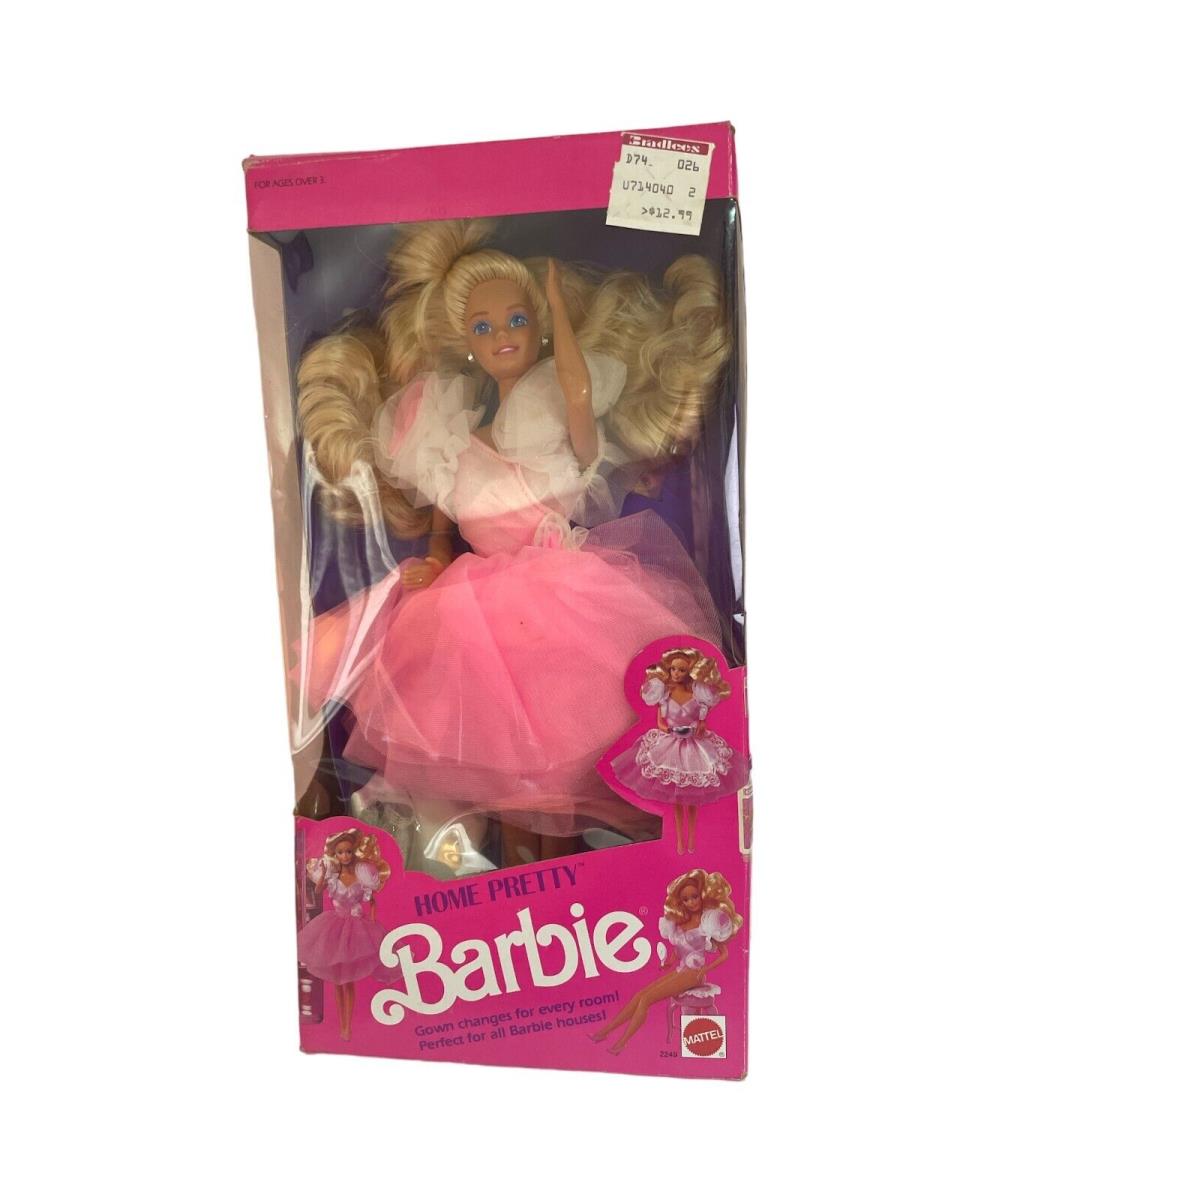 Home Pretty Barbie Doll 2249 Vintage 1990 Mattel B